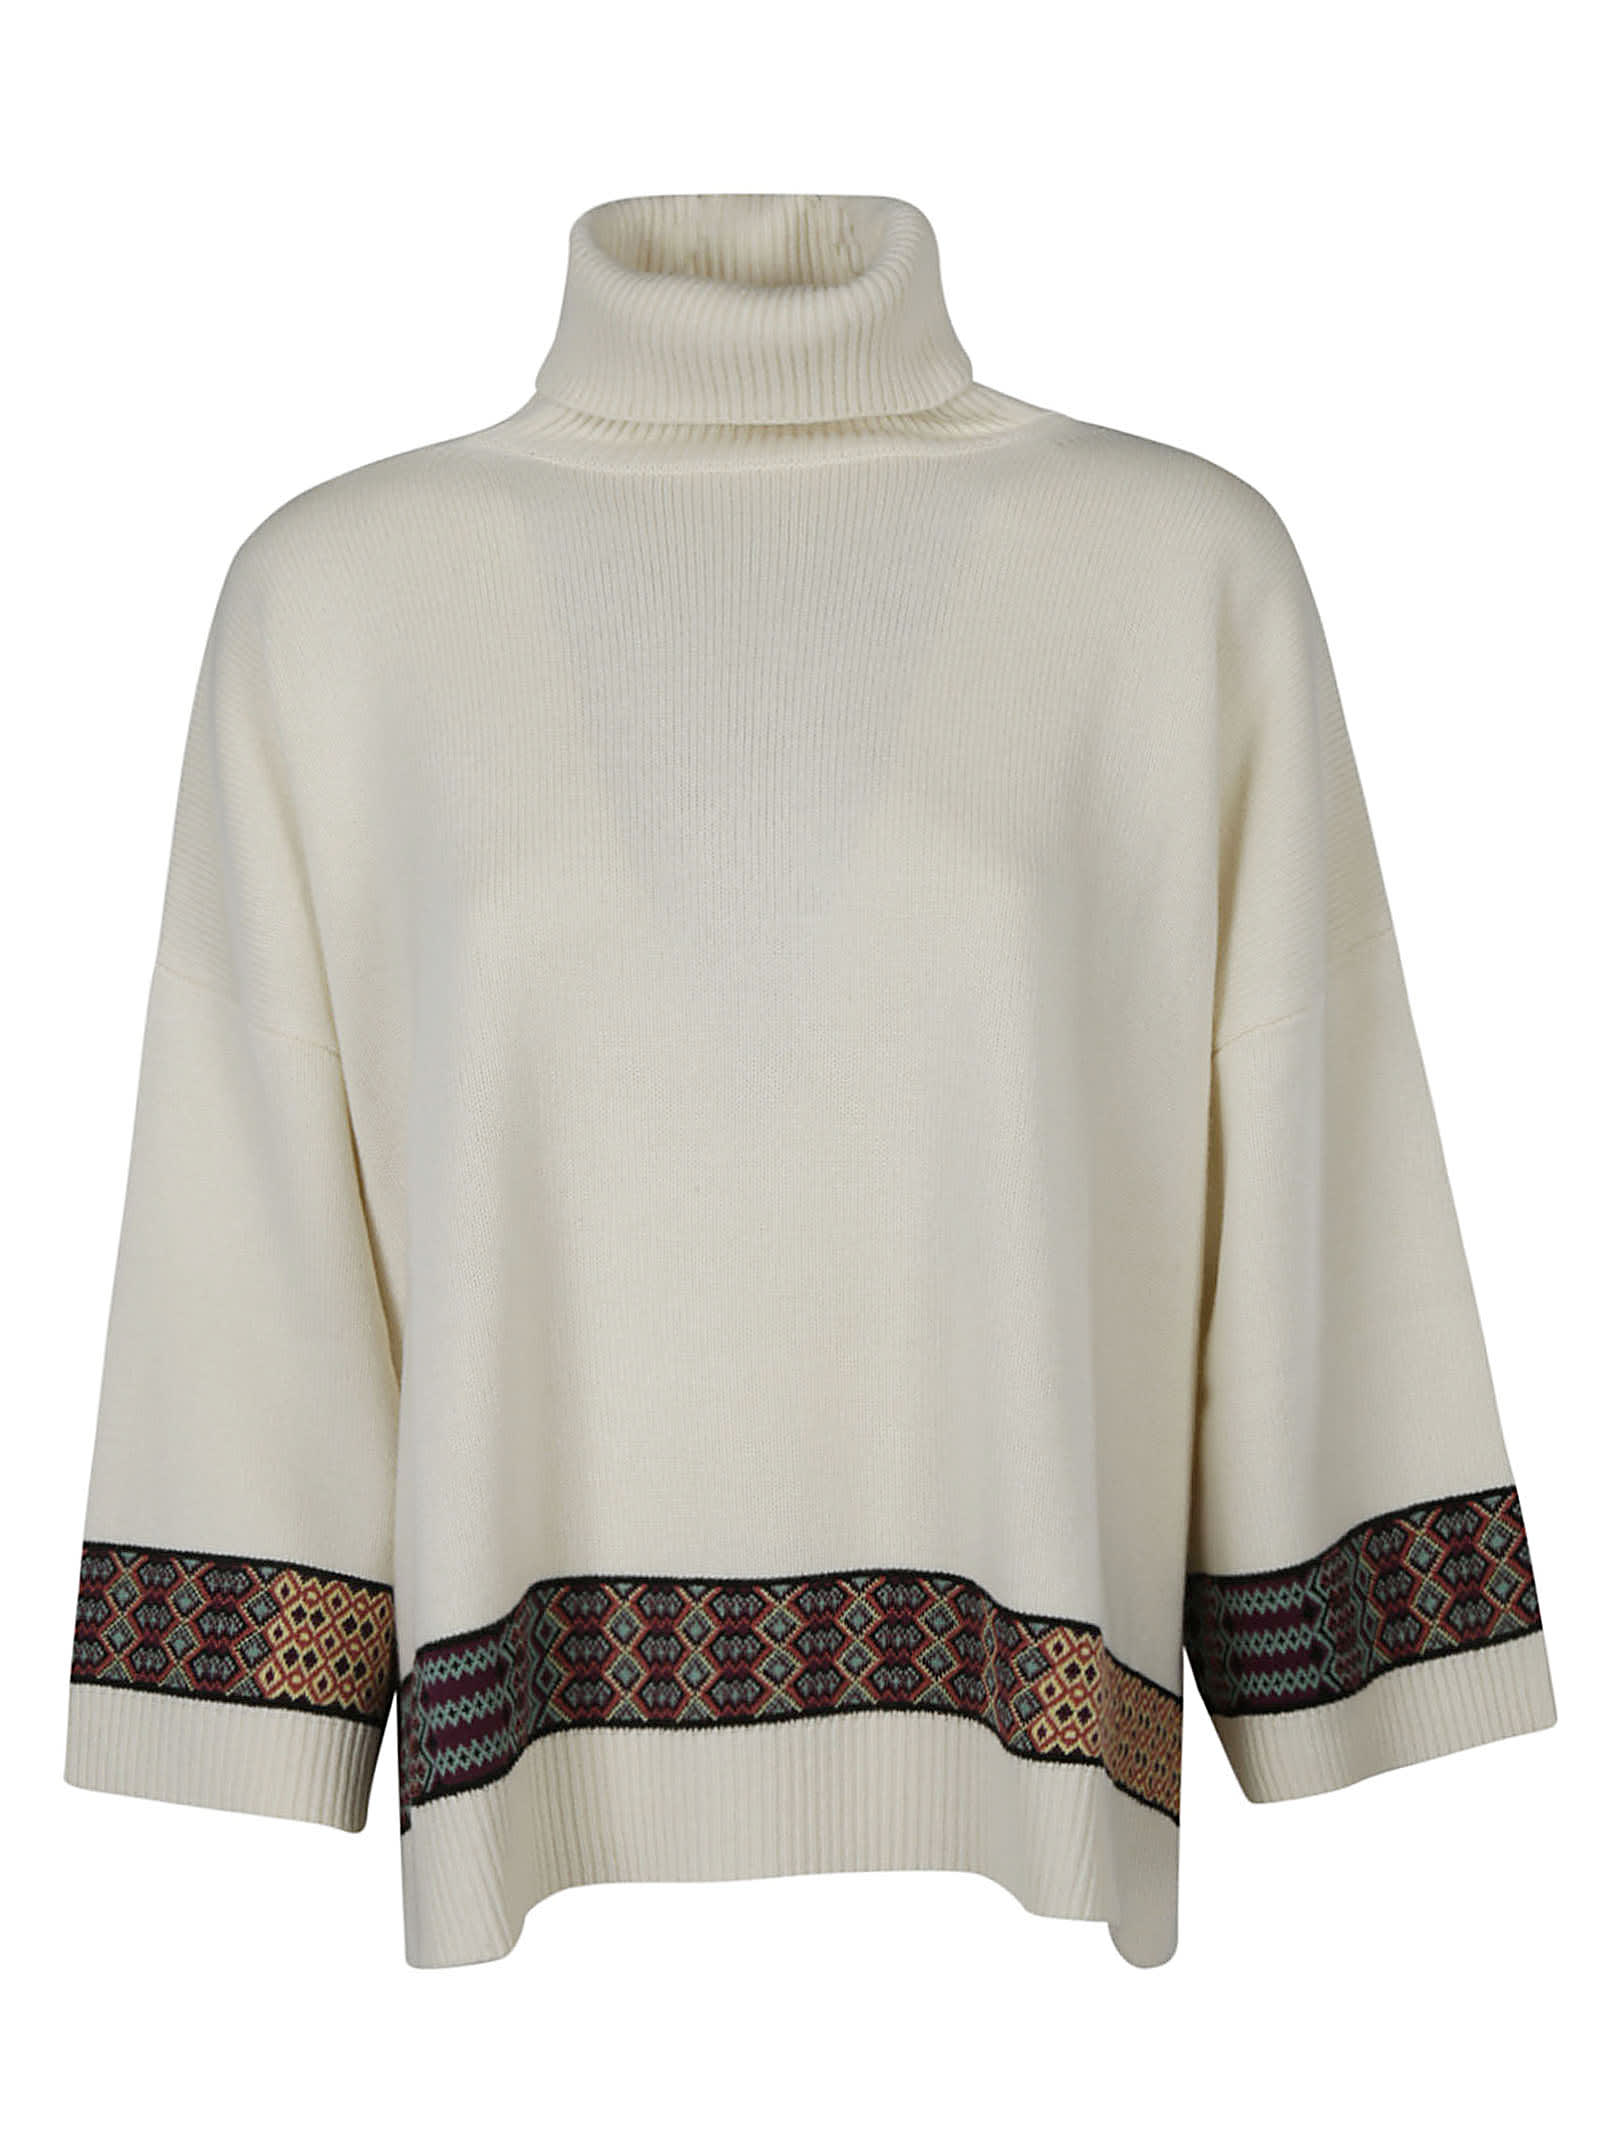 Etro Patterned Turtleneck Sweater